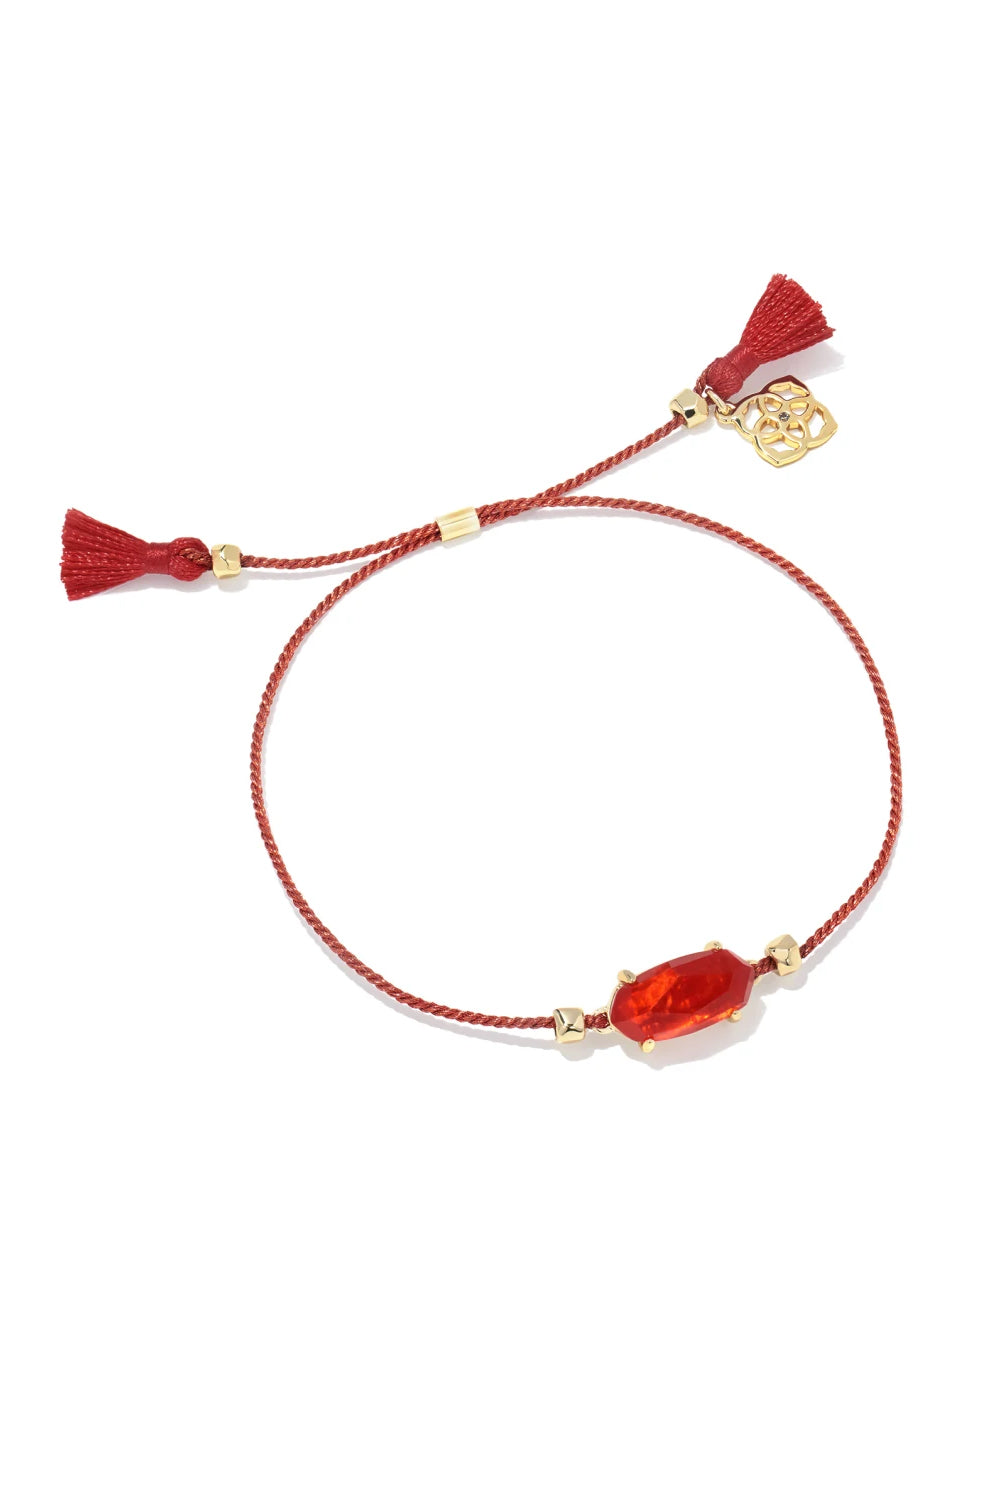 Kendra Scott: Everlyne Red Cord Friendship Bracelet - Red Illusion | Makk Fashions